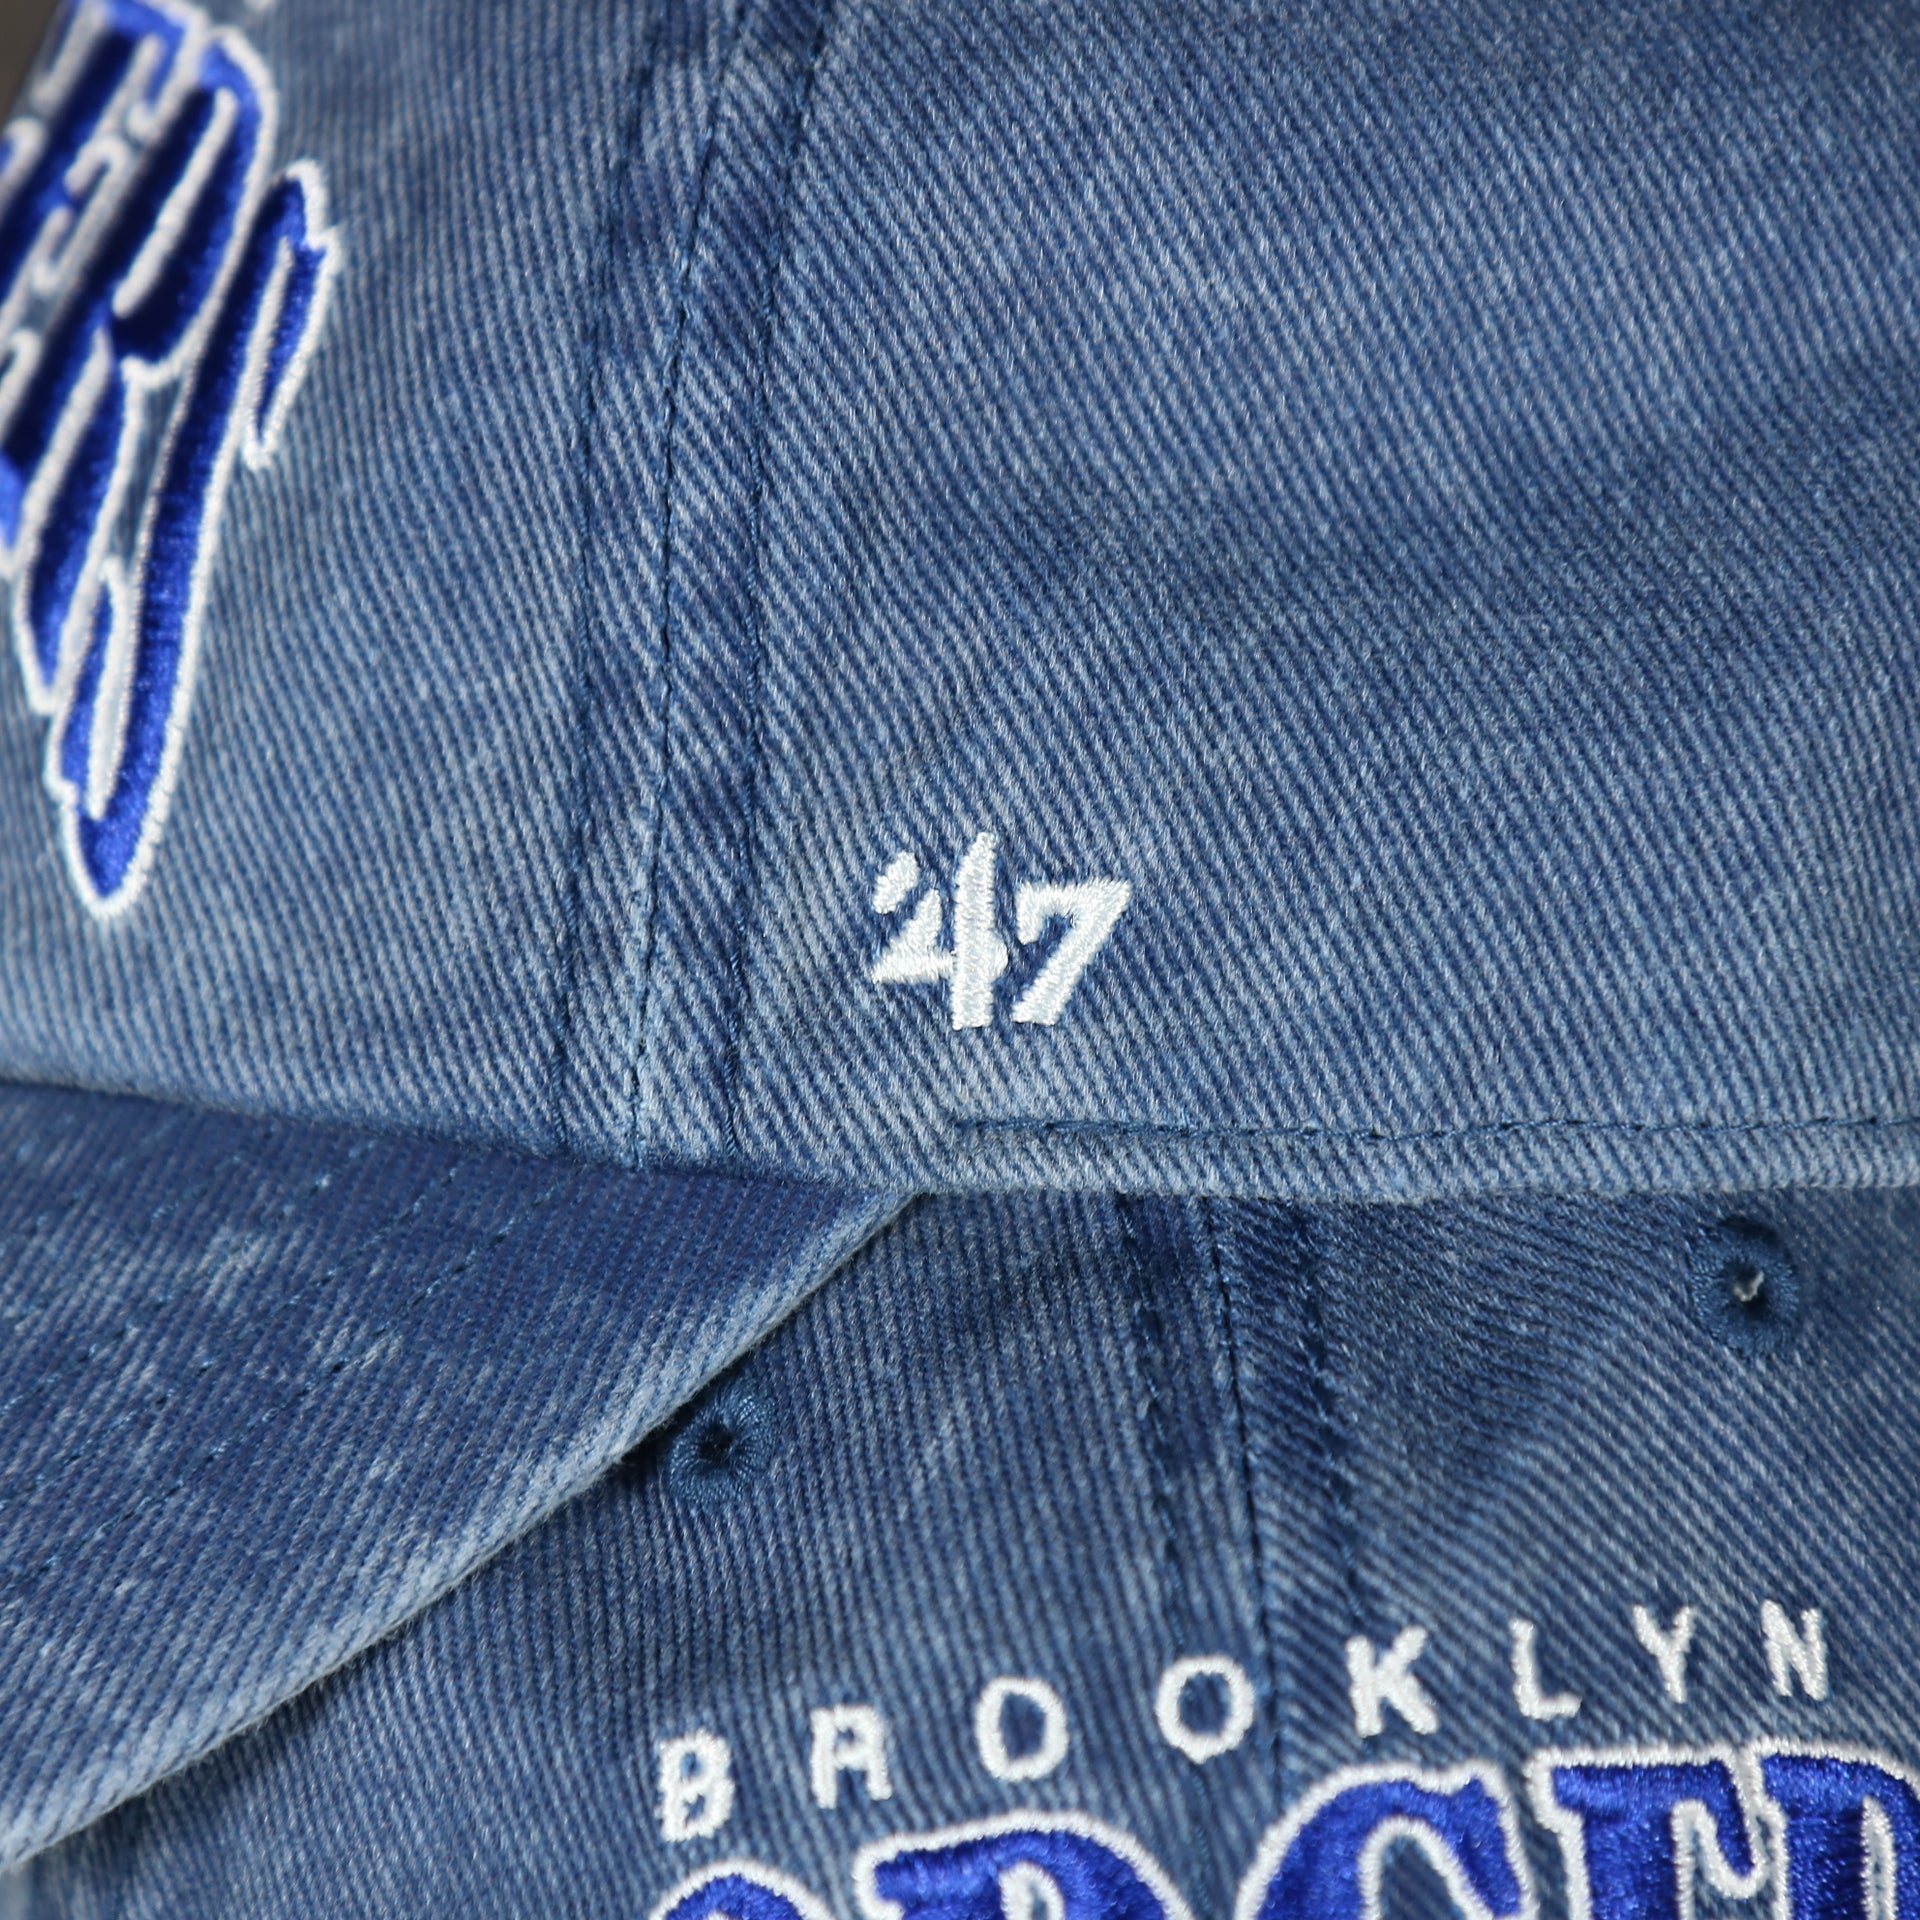 47 brand logo on the Brooklyn Dodgers Throwback Distressed Blue Dad Hat | Blue Adjustable Baseball Cap